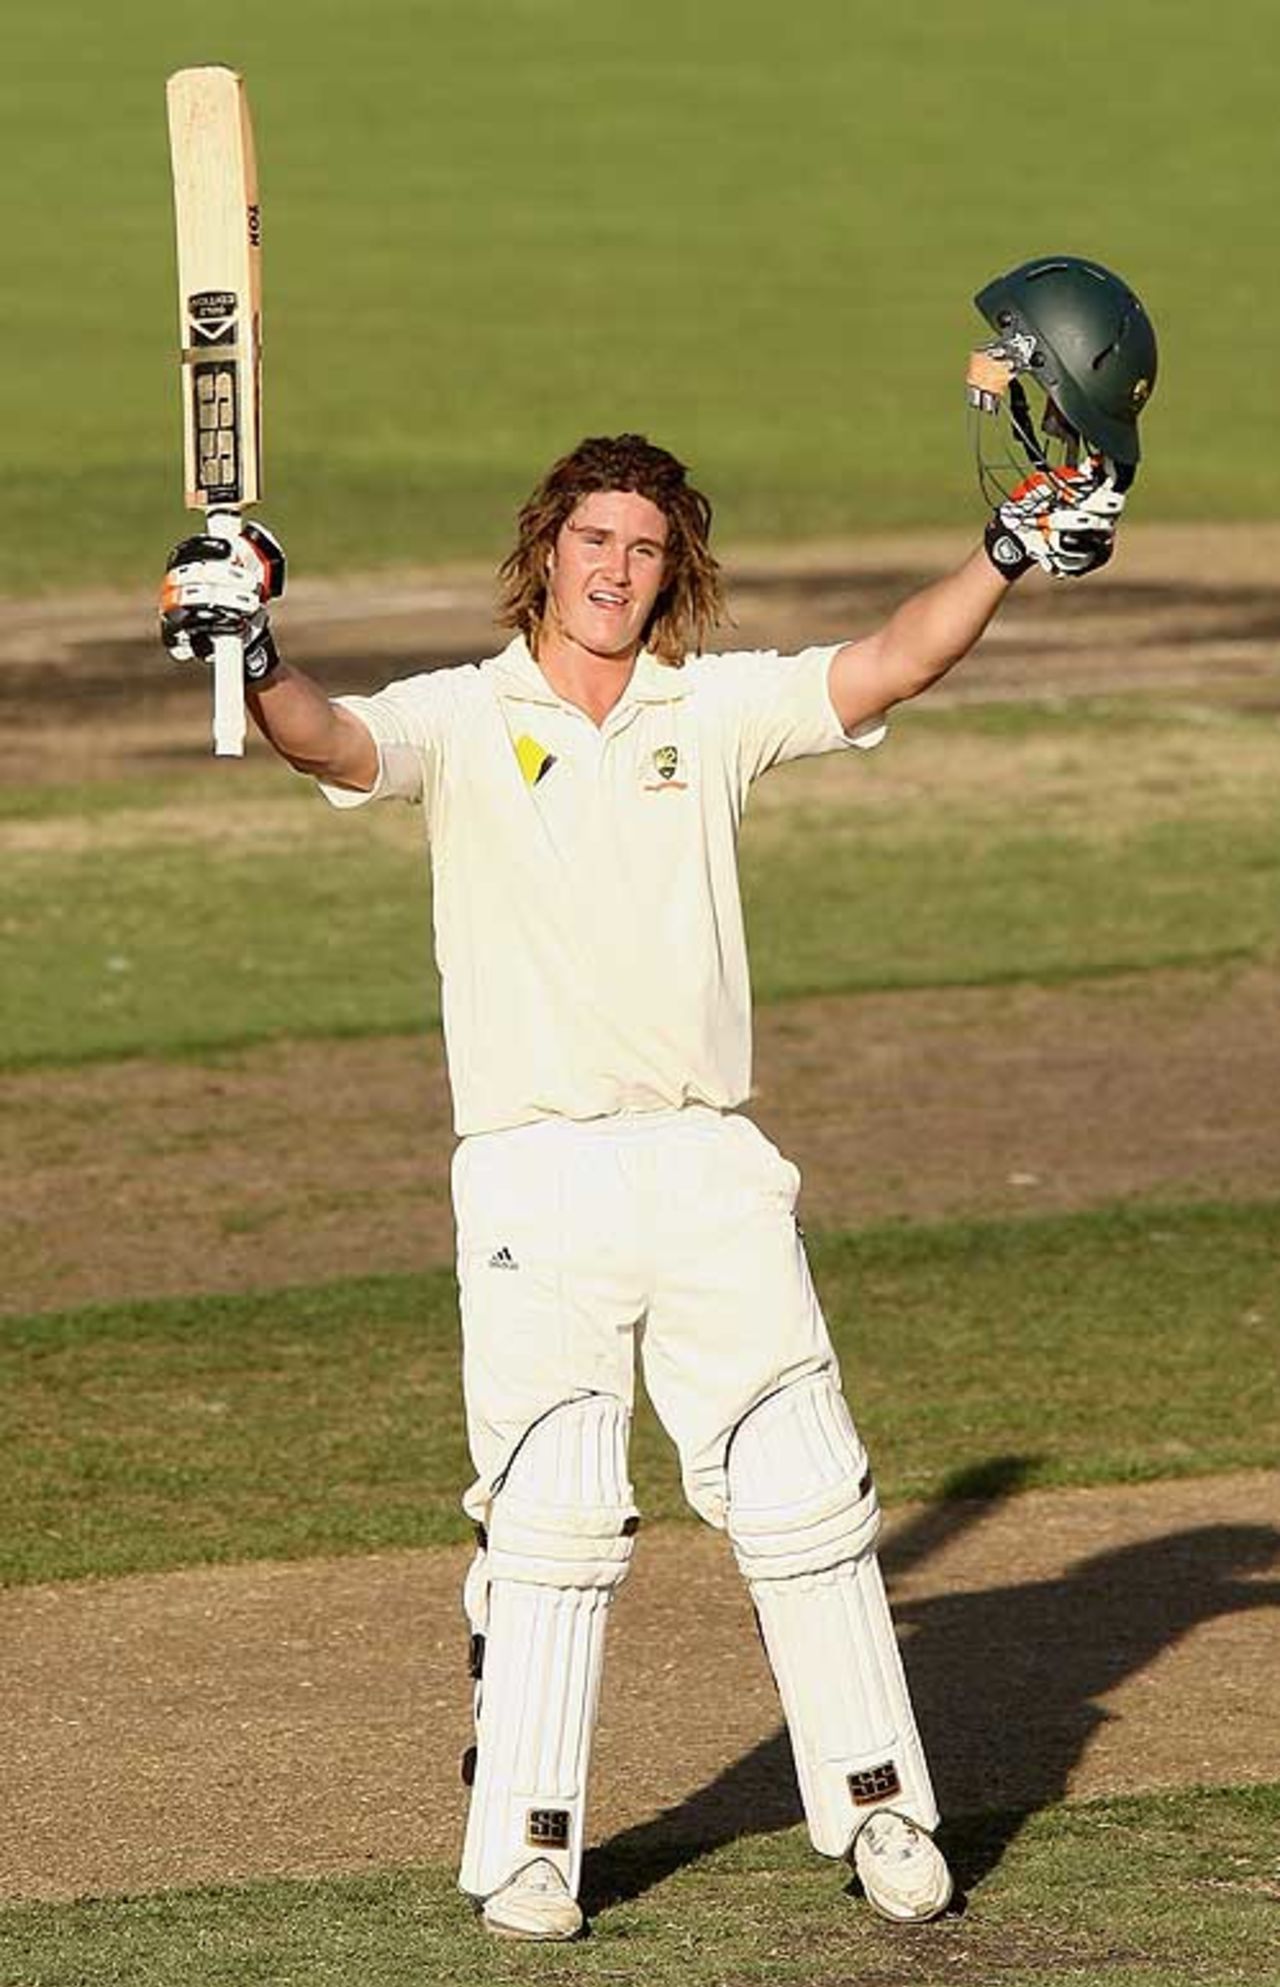 Tom Beaton celebrates his century, Australia Under-19 v India Under-19, 1st Test, Hobart, 1st day, April 11 2009